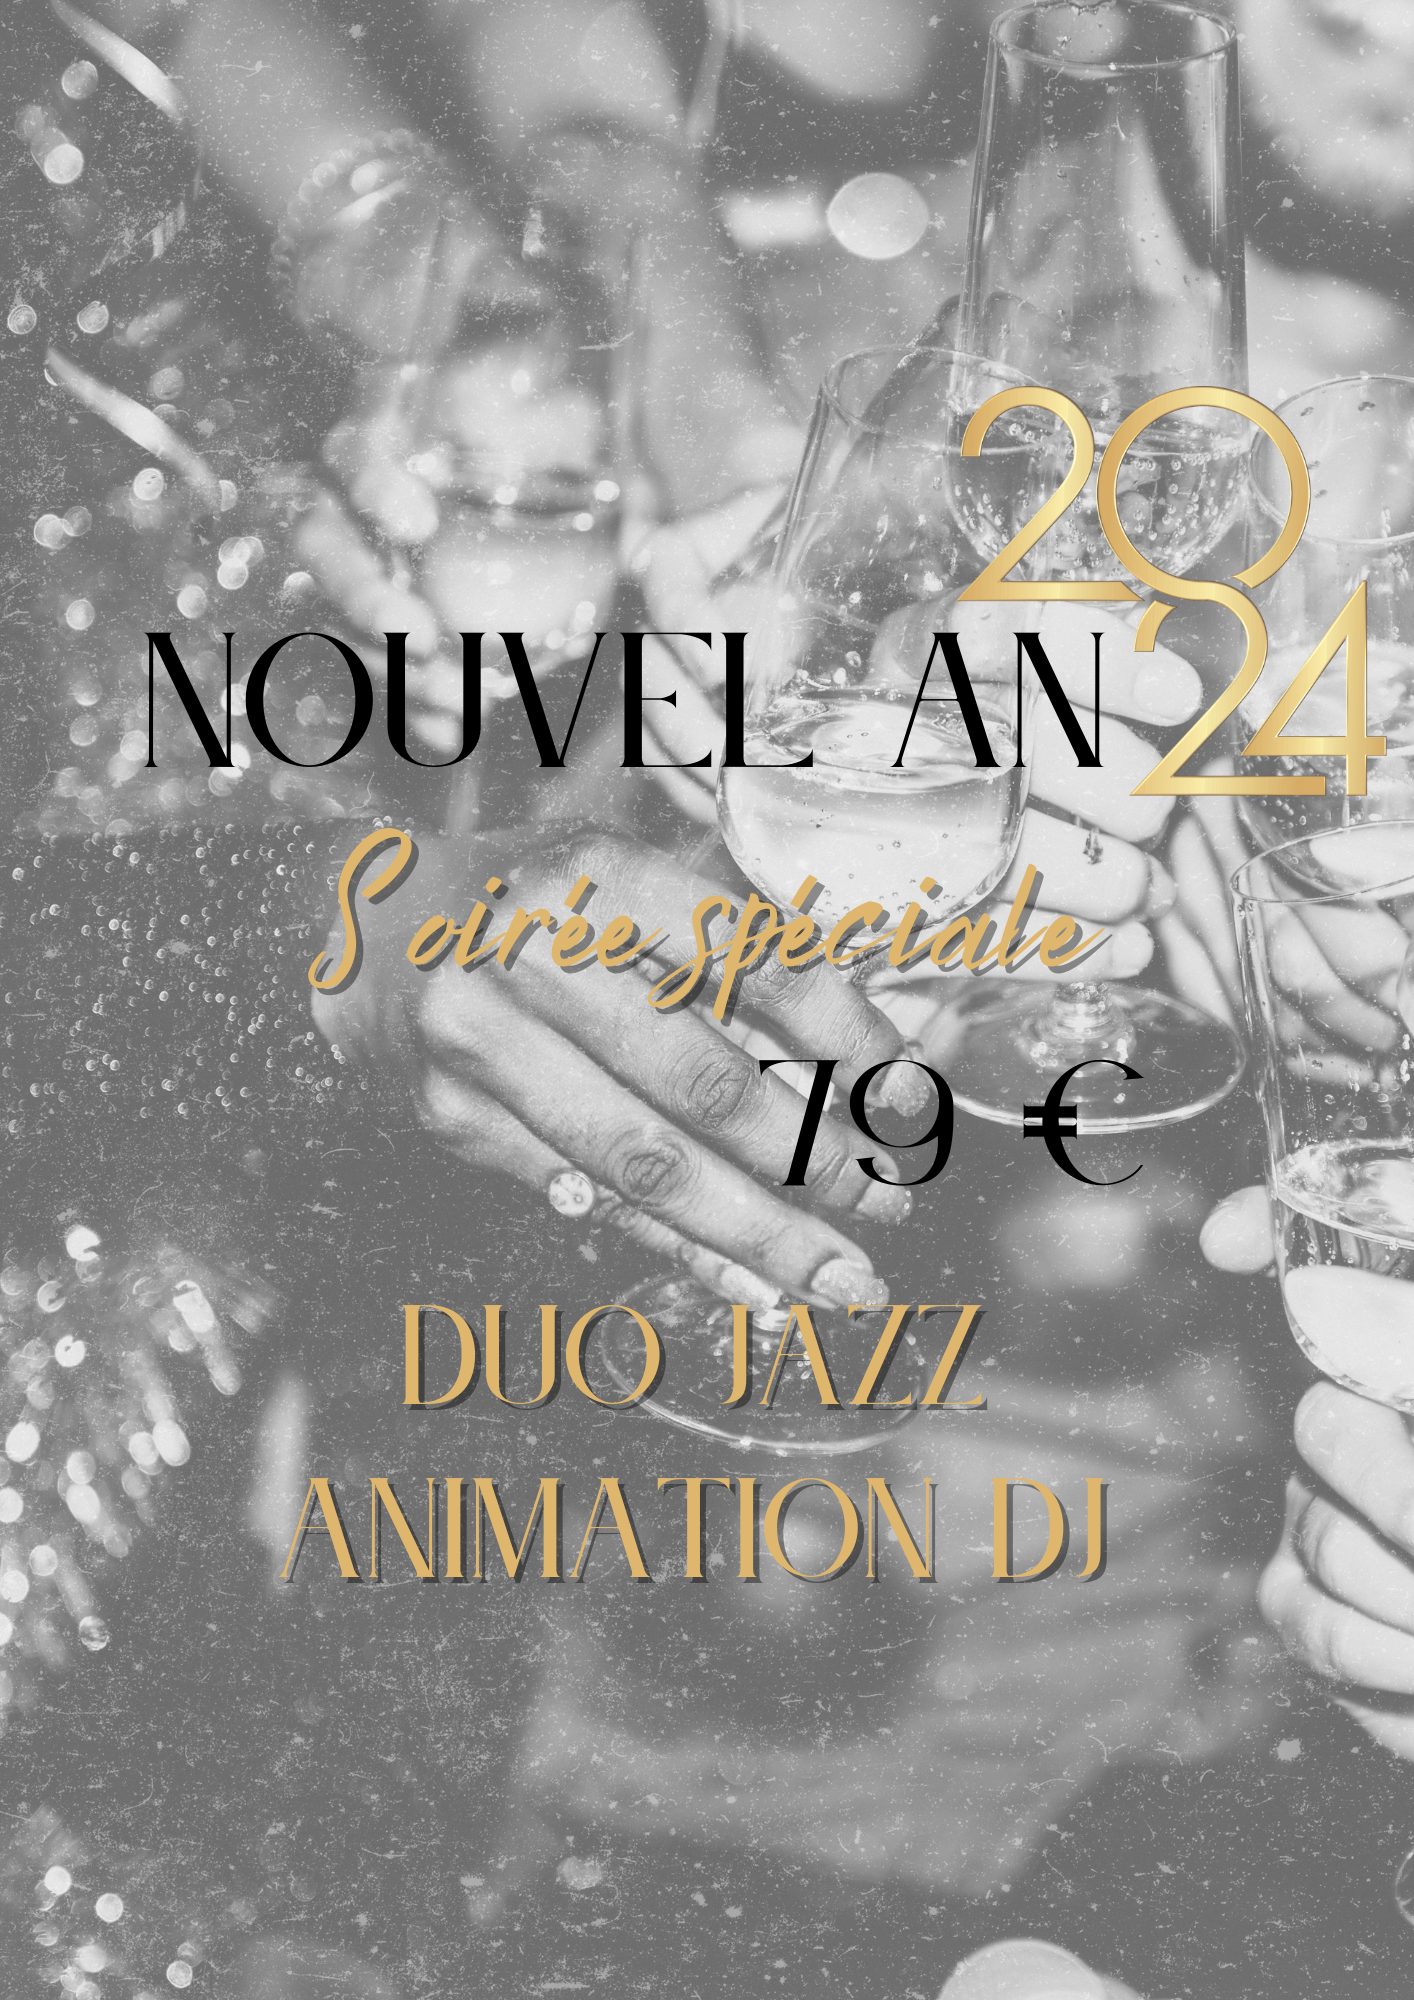 New Year 2 - Le Moulin d'Orgemont